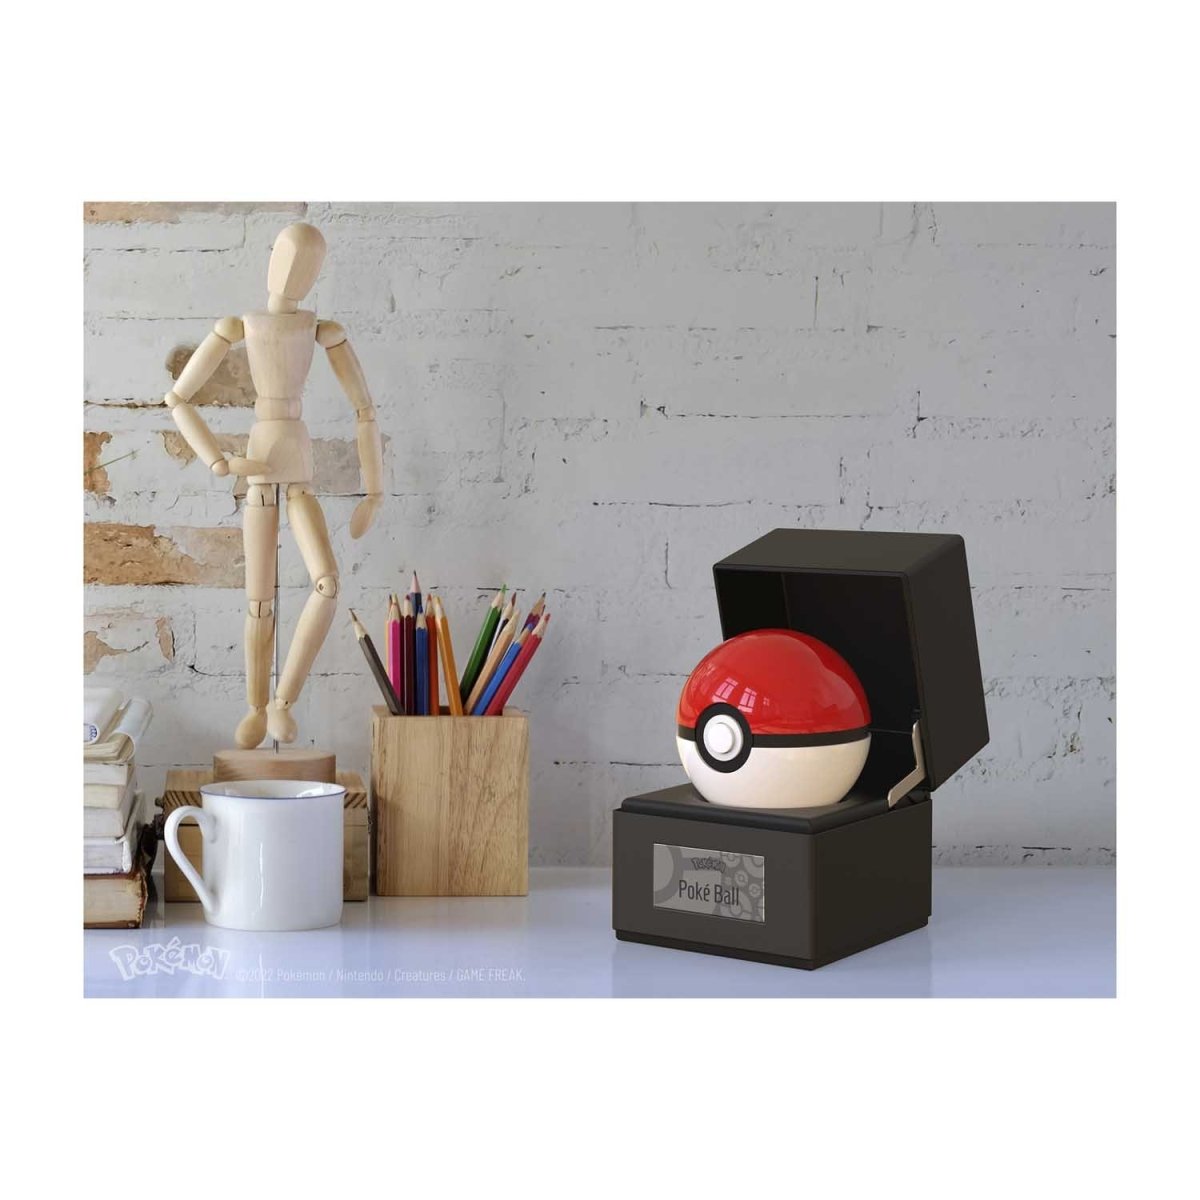 Pokémon: Pokeball Carabiner Mug Preorder - Merchoid